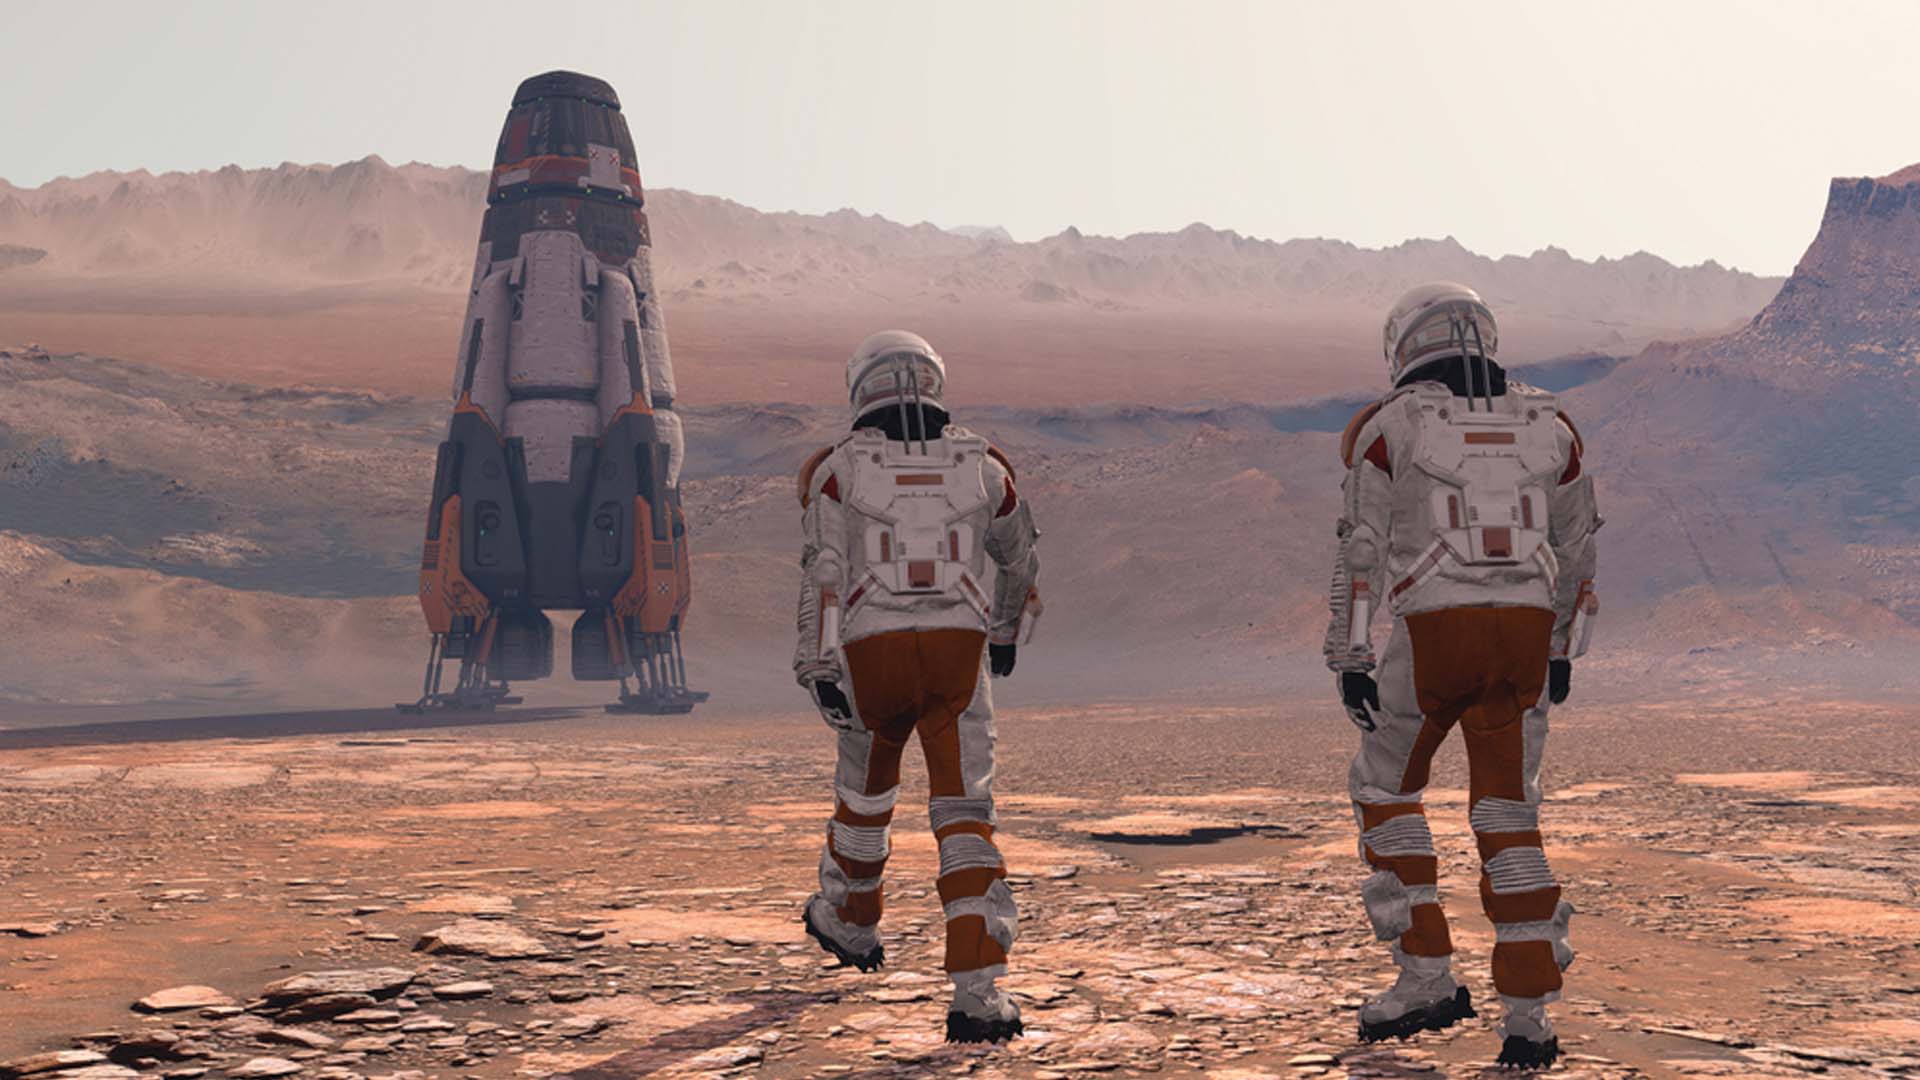 3D Rendering of Astronauts on Mars